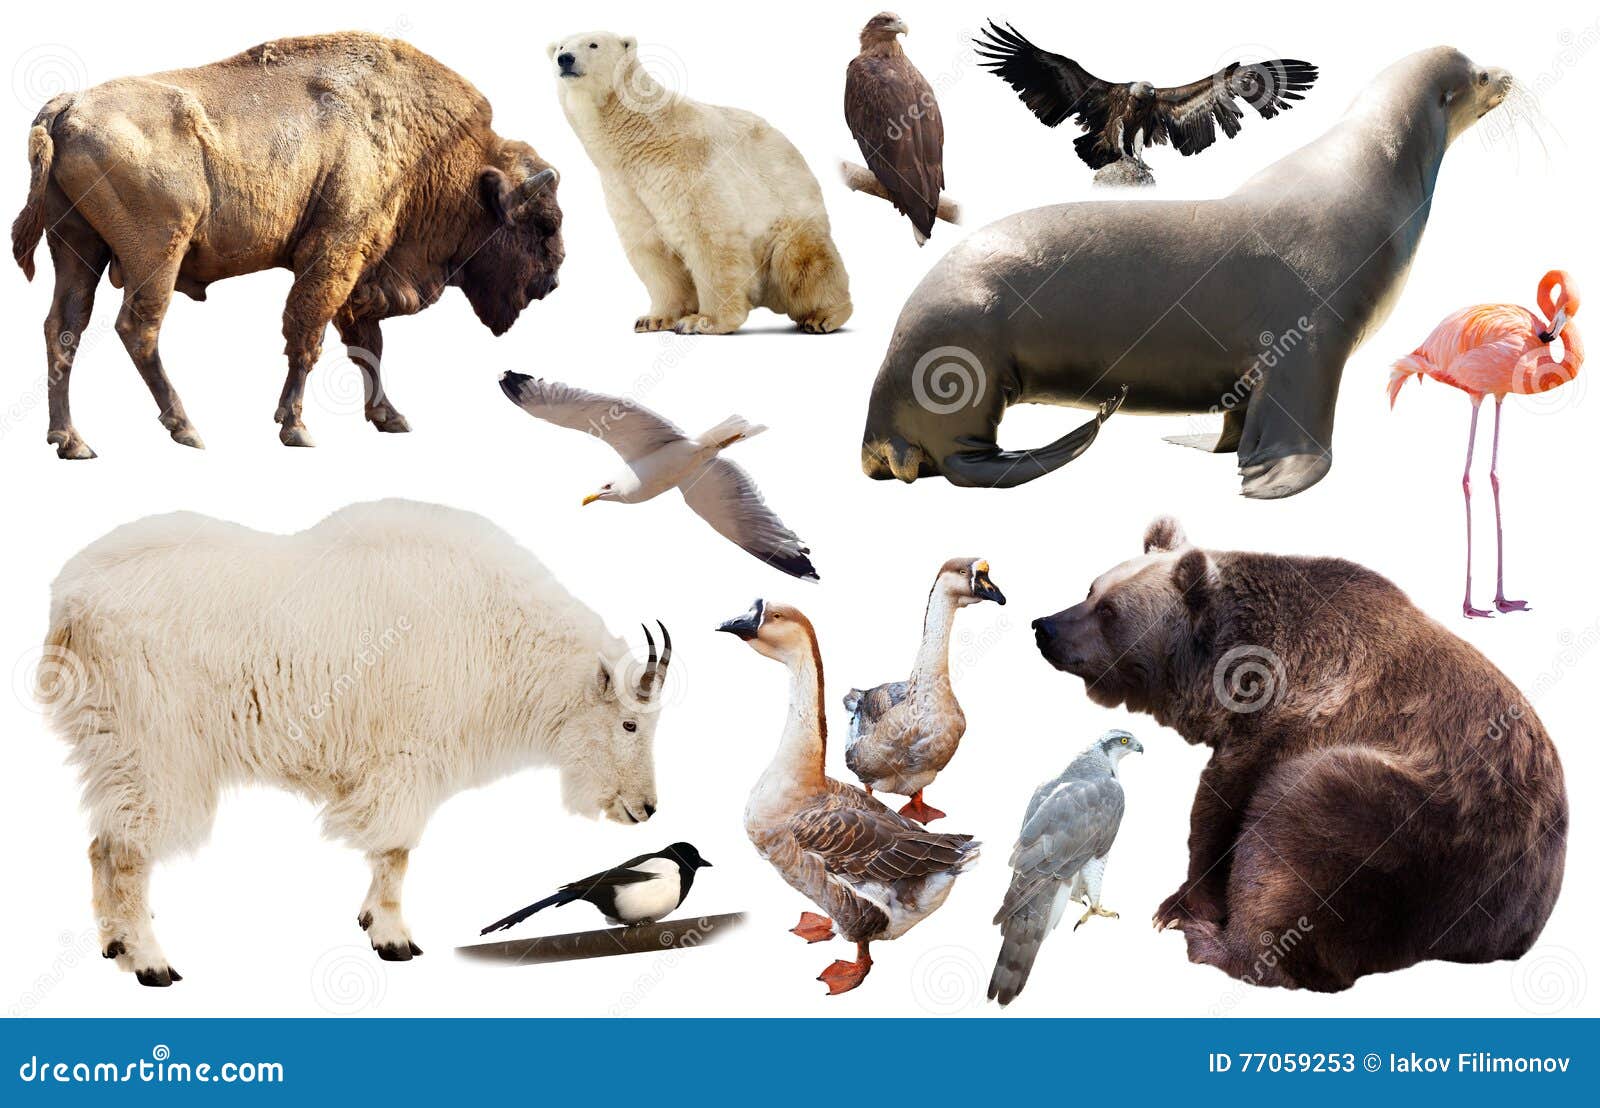 Nordamerika Tiere